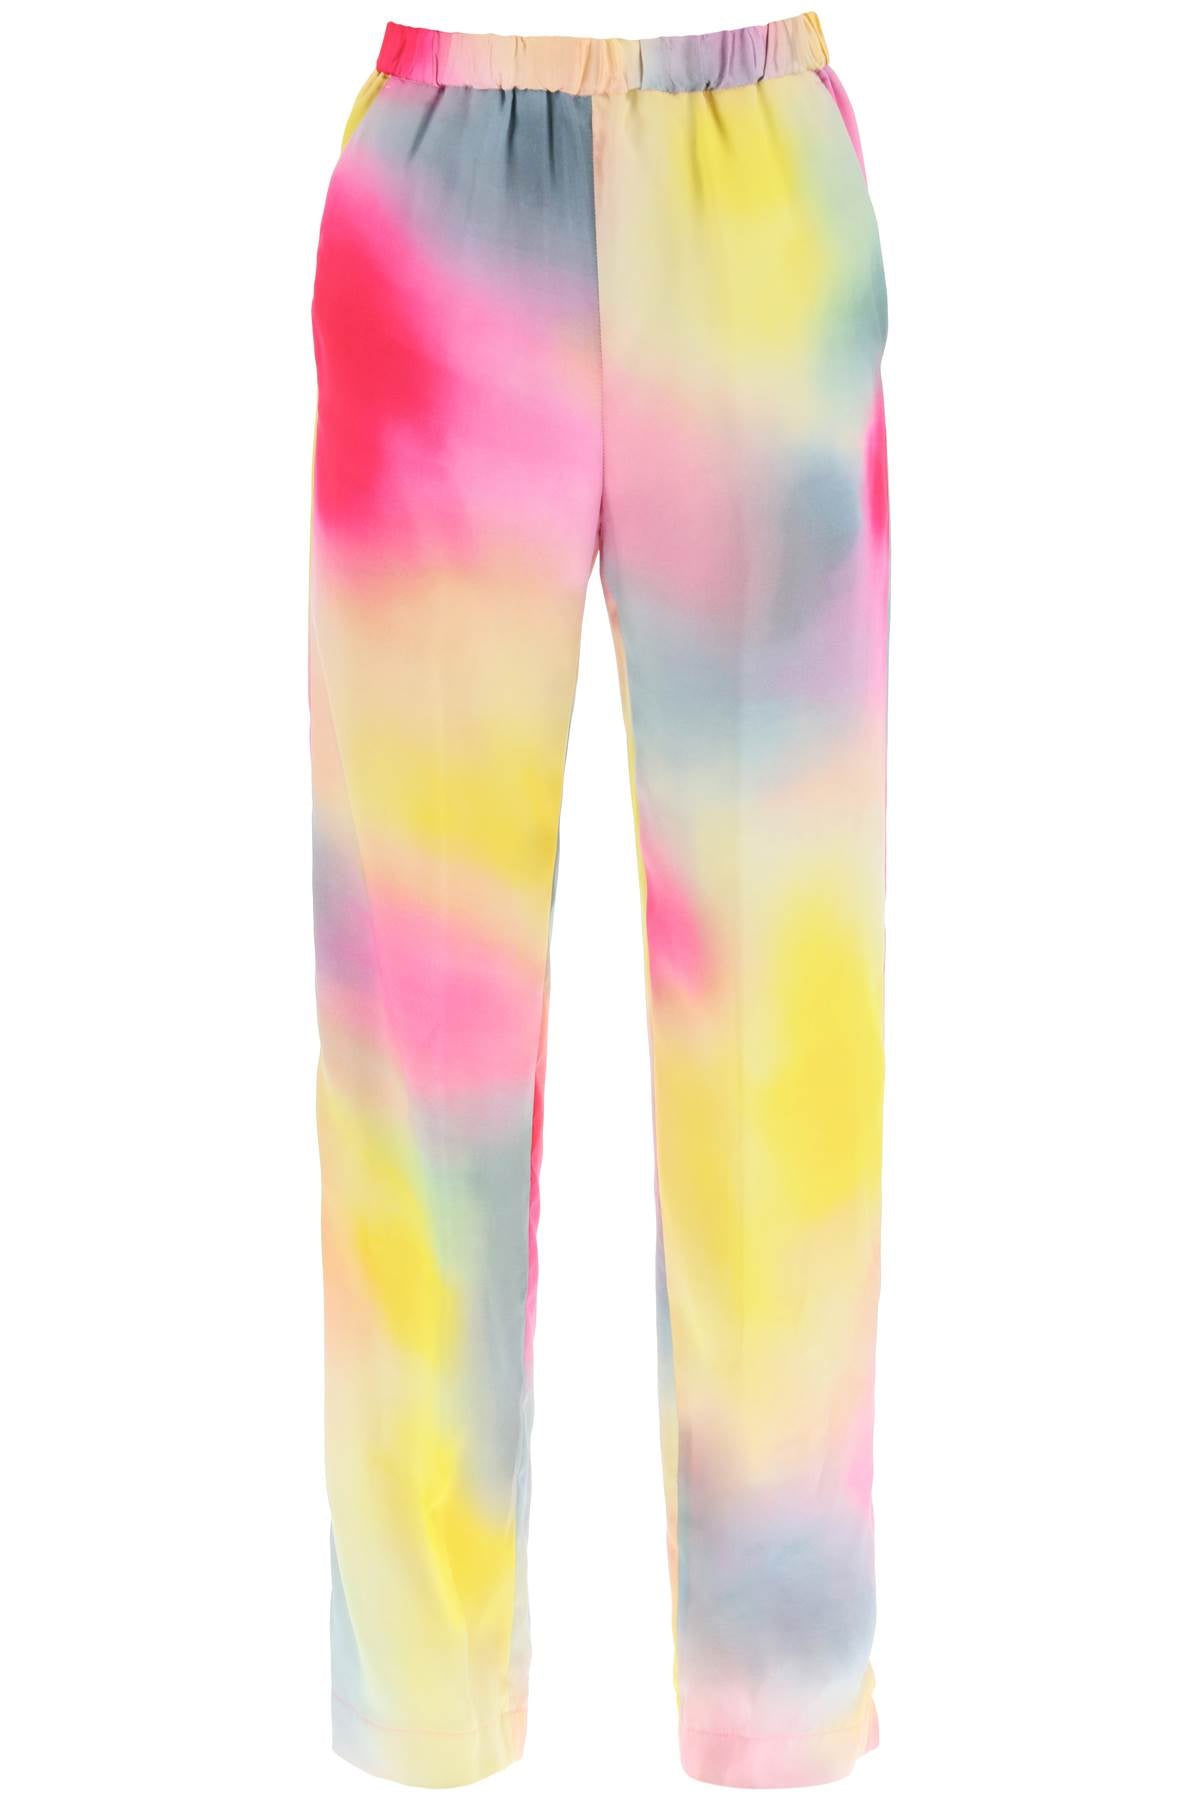 Msgm multicolored satin pants-0